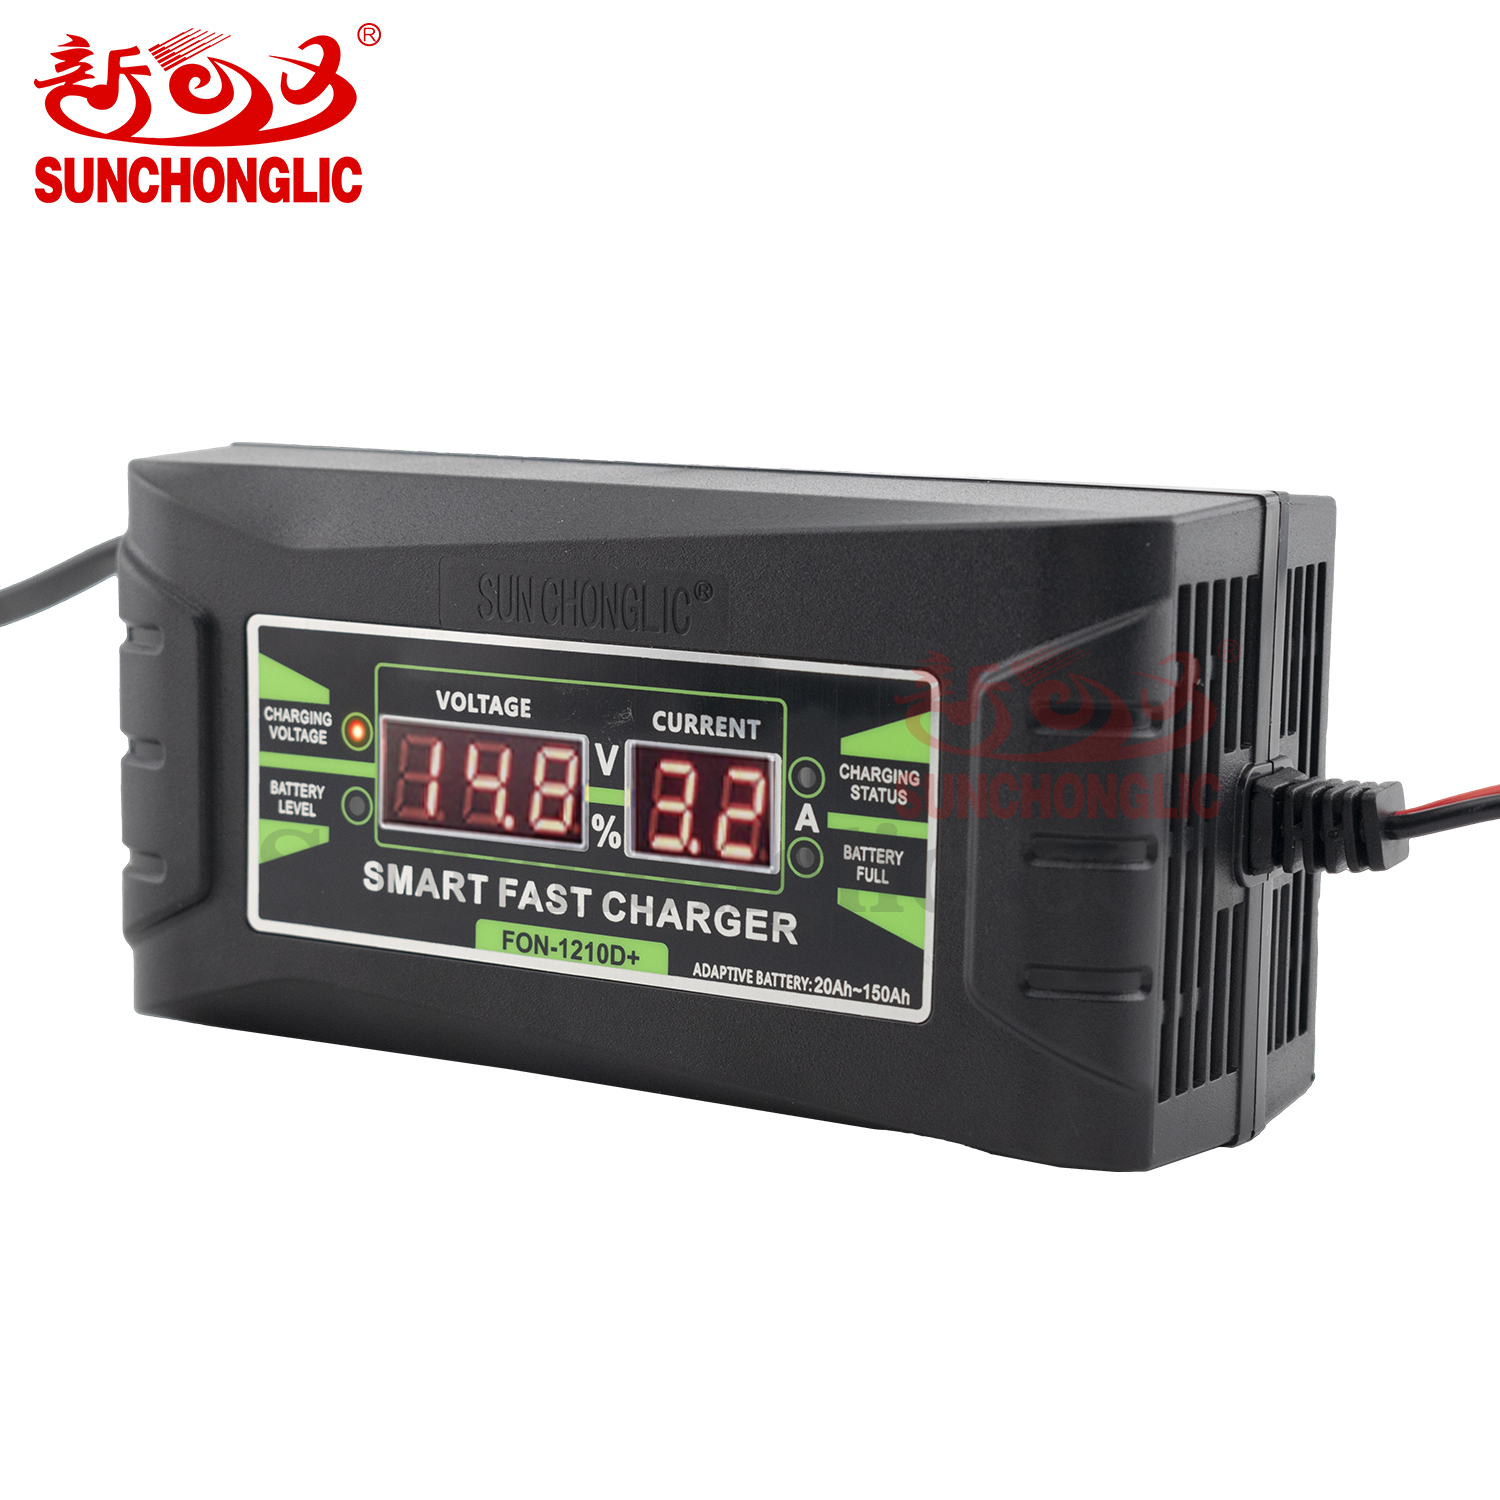 FON-1210D+ - AGM/GEL Battery Charger - Foshan Sunchonglic Electric